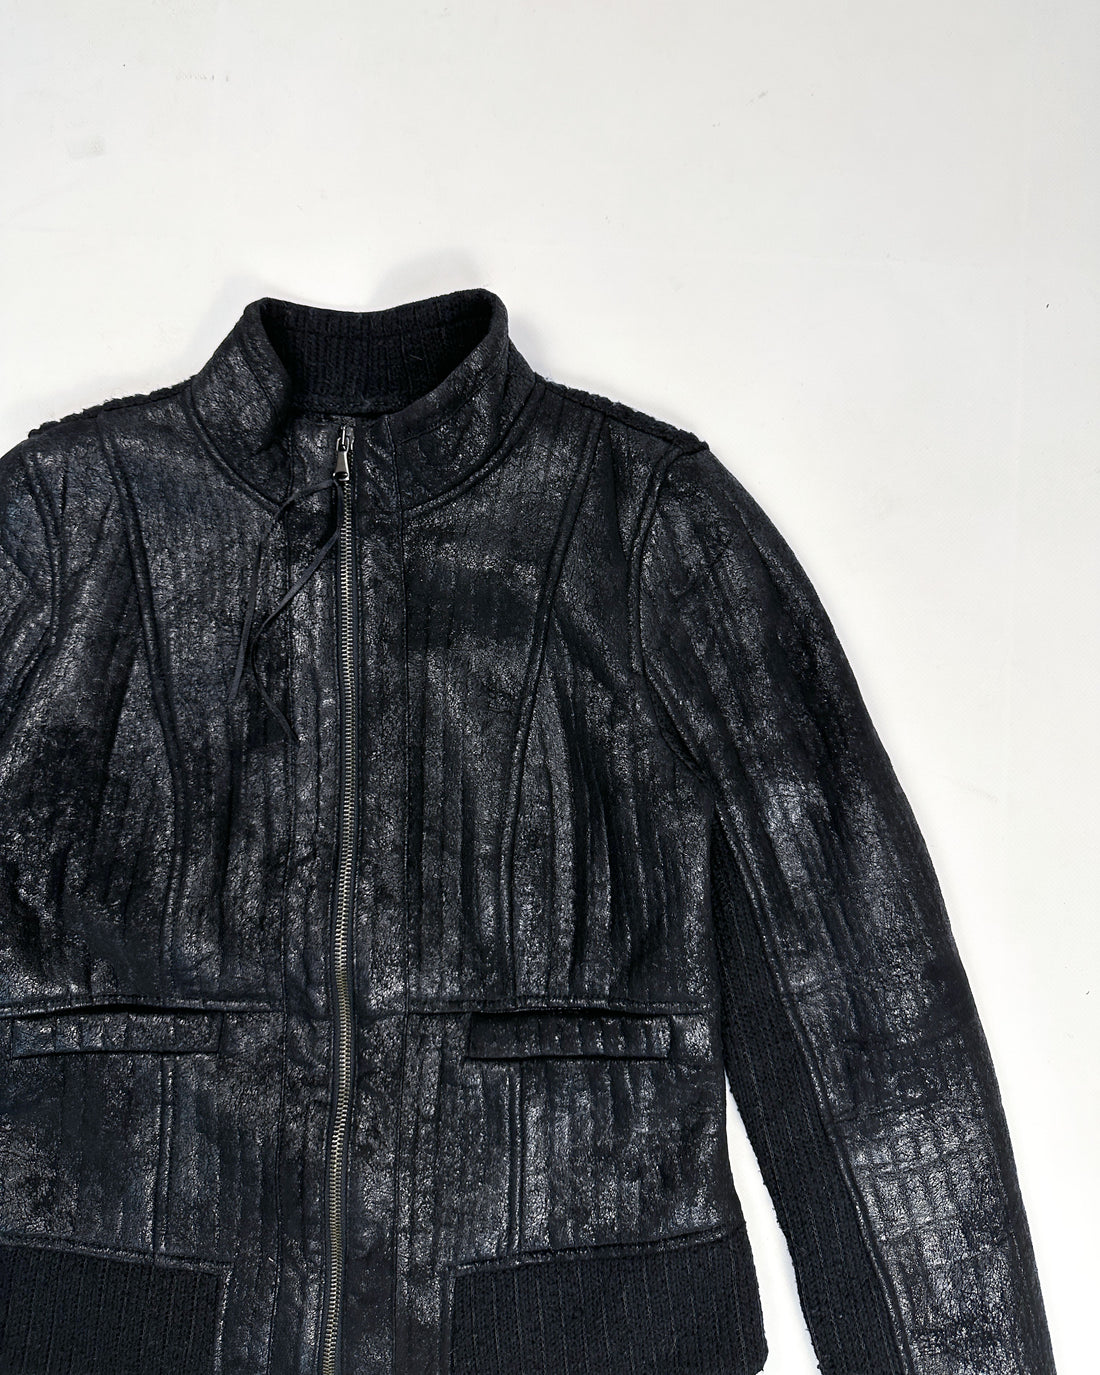 Voodoo Black Cracked Jacket 1990's